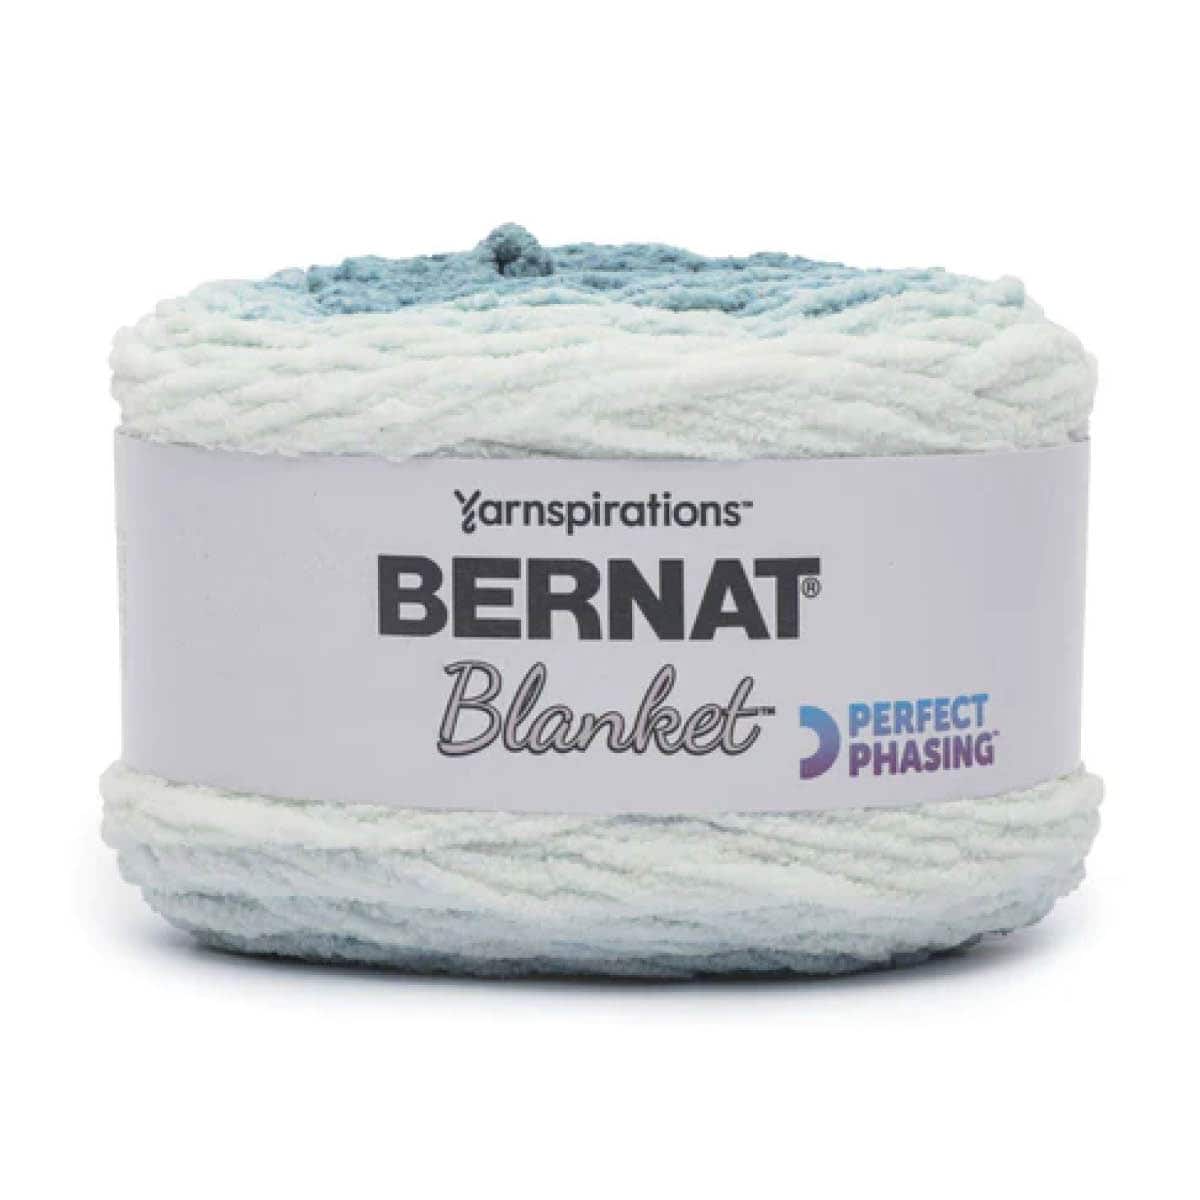 Bernat Blanket Perfect Phasing Yarn Product